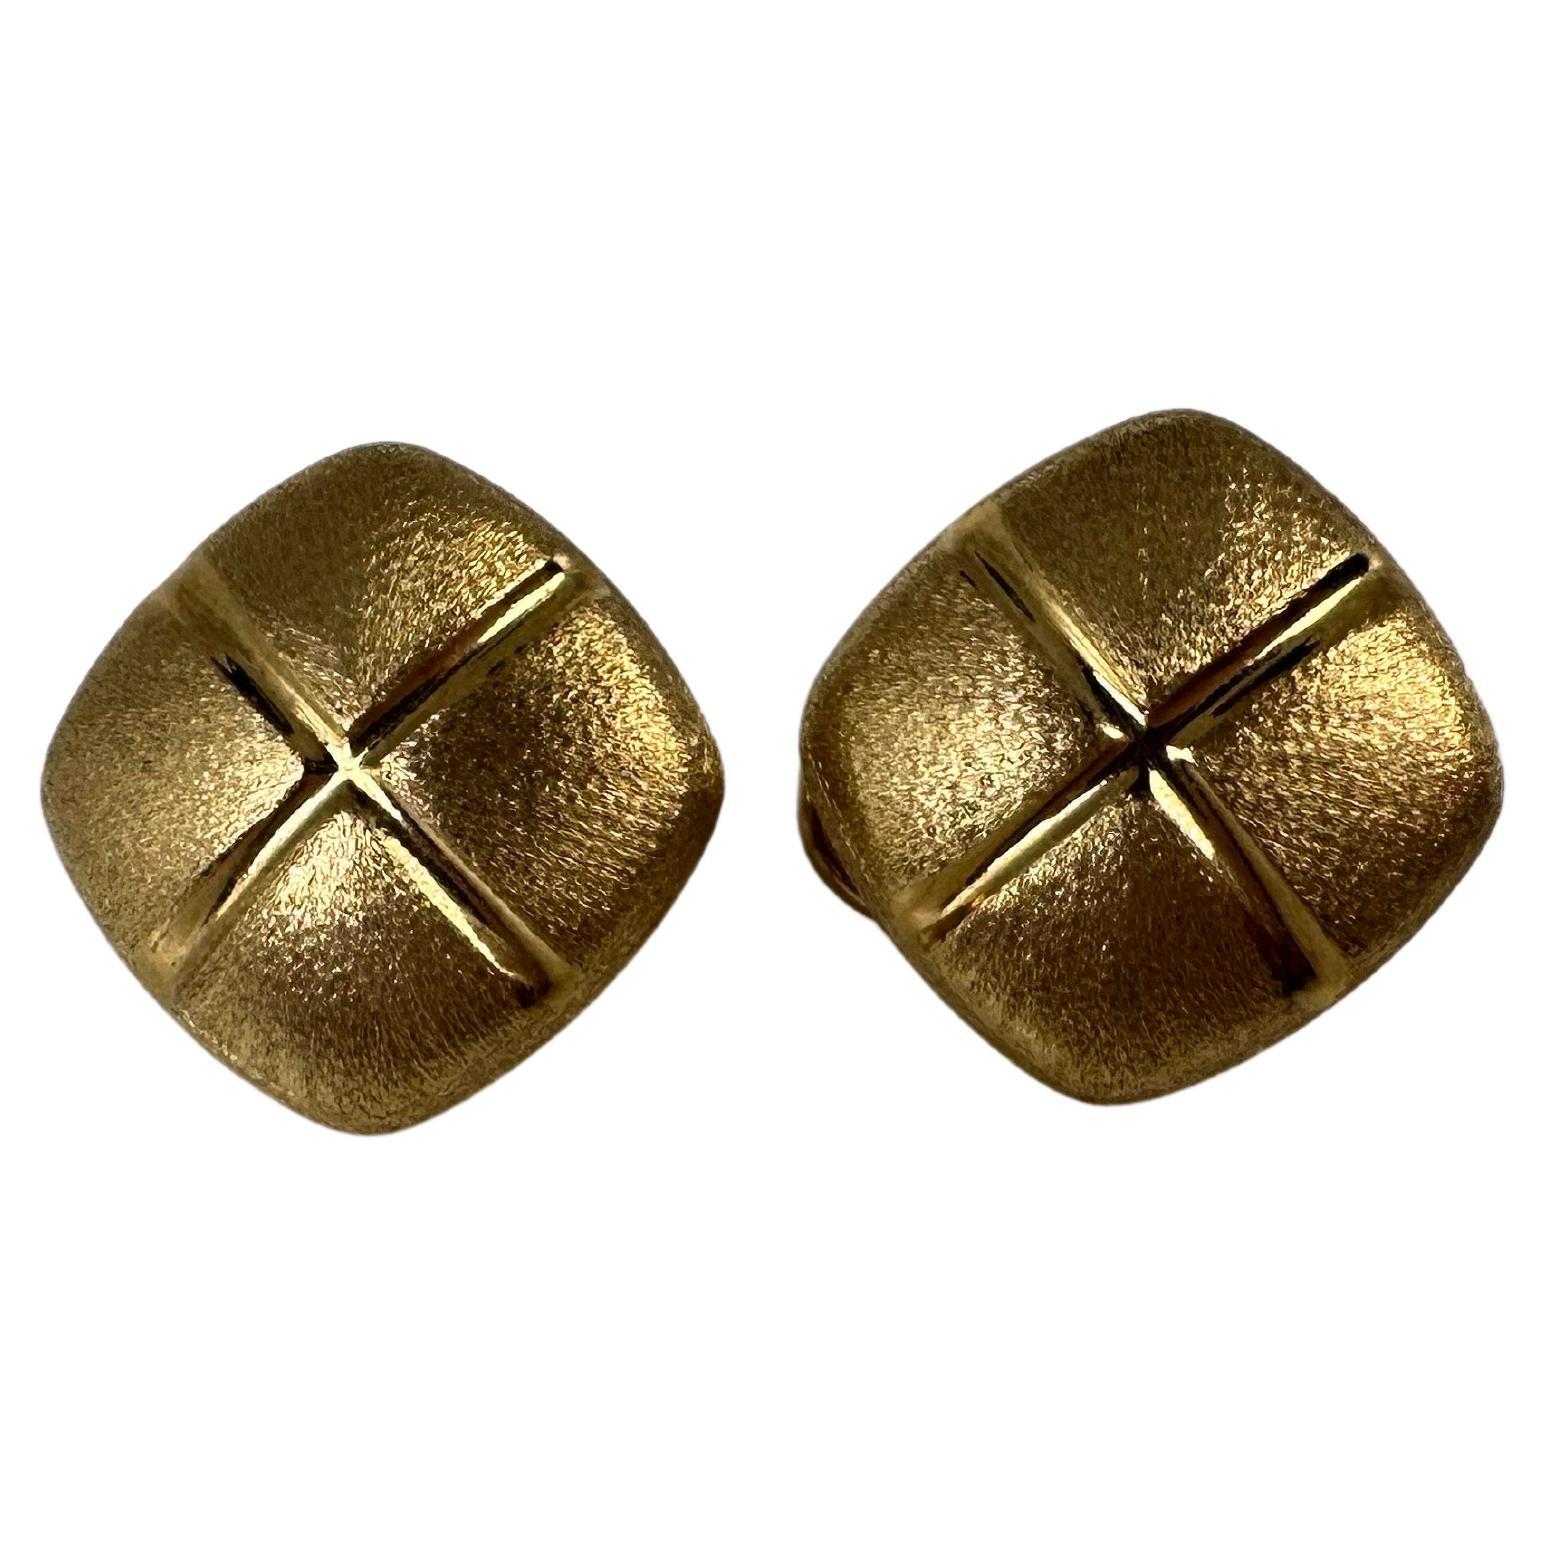 Button square gold earrings 18KT omega closure abrasive polish design